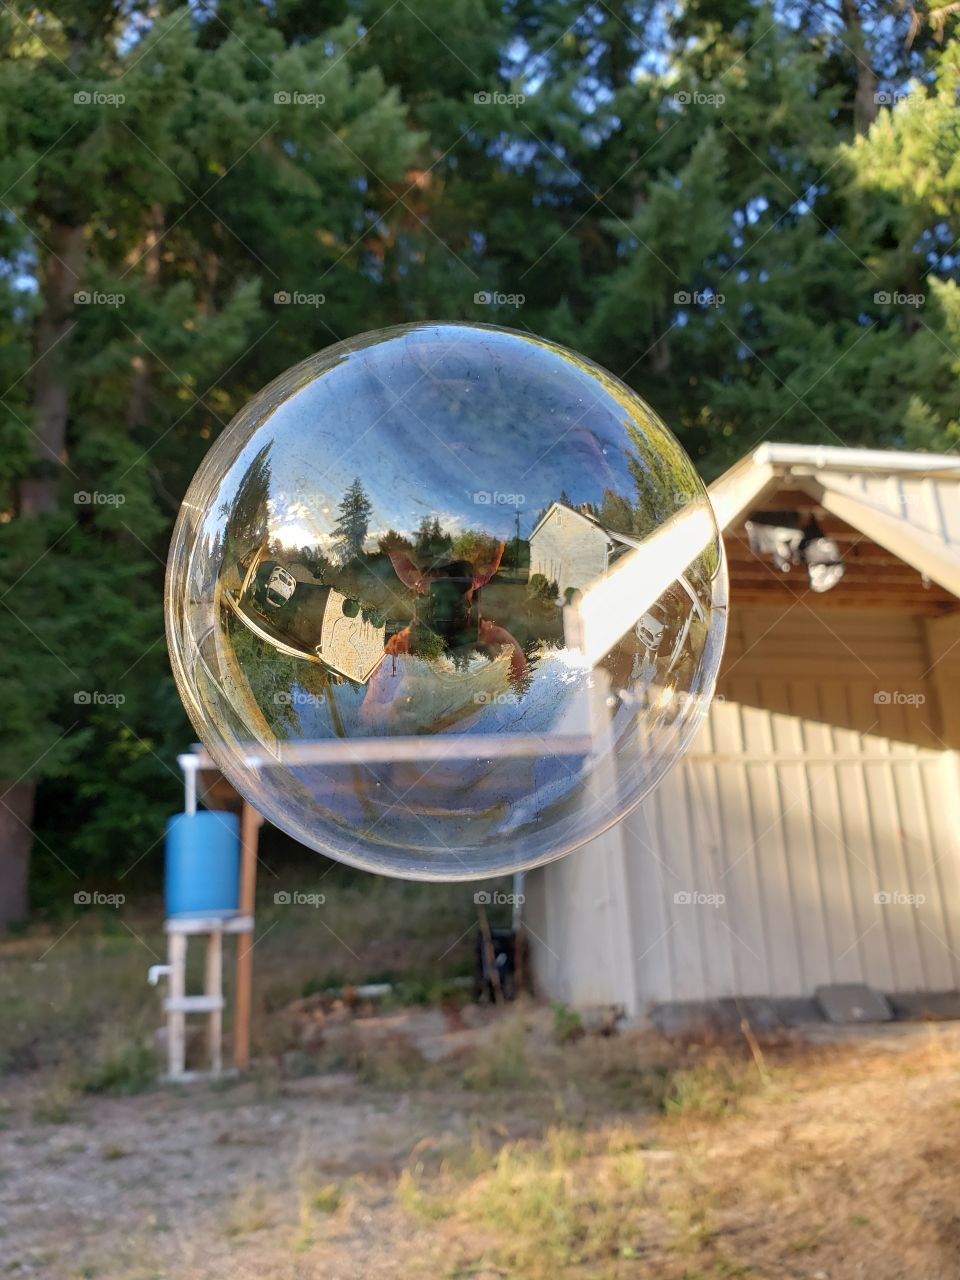 Bubble by the shop